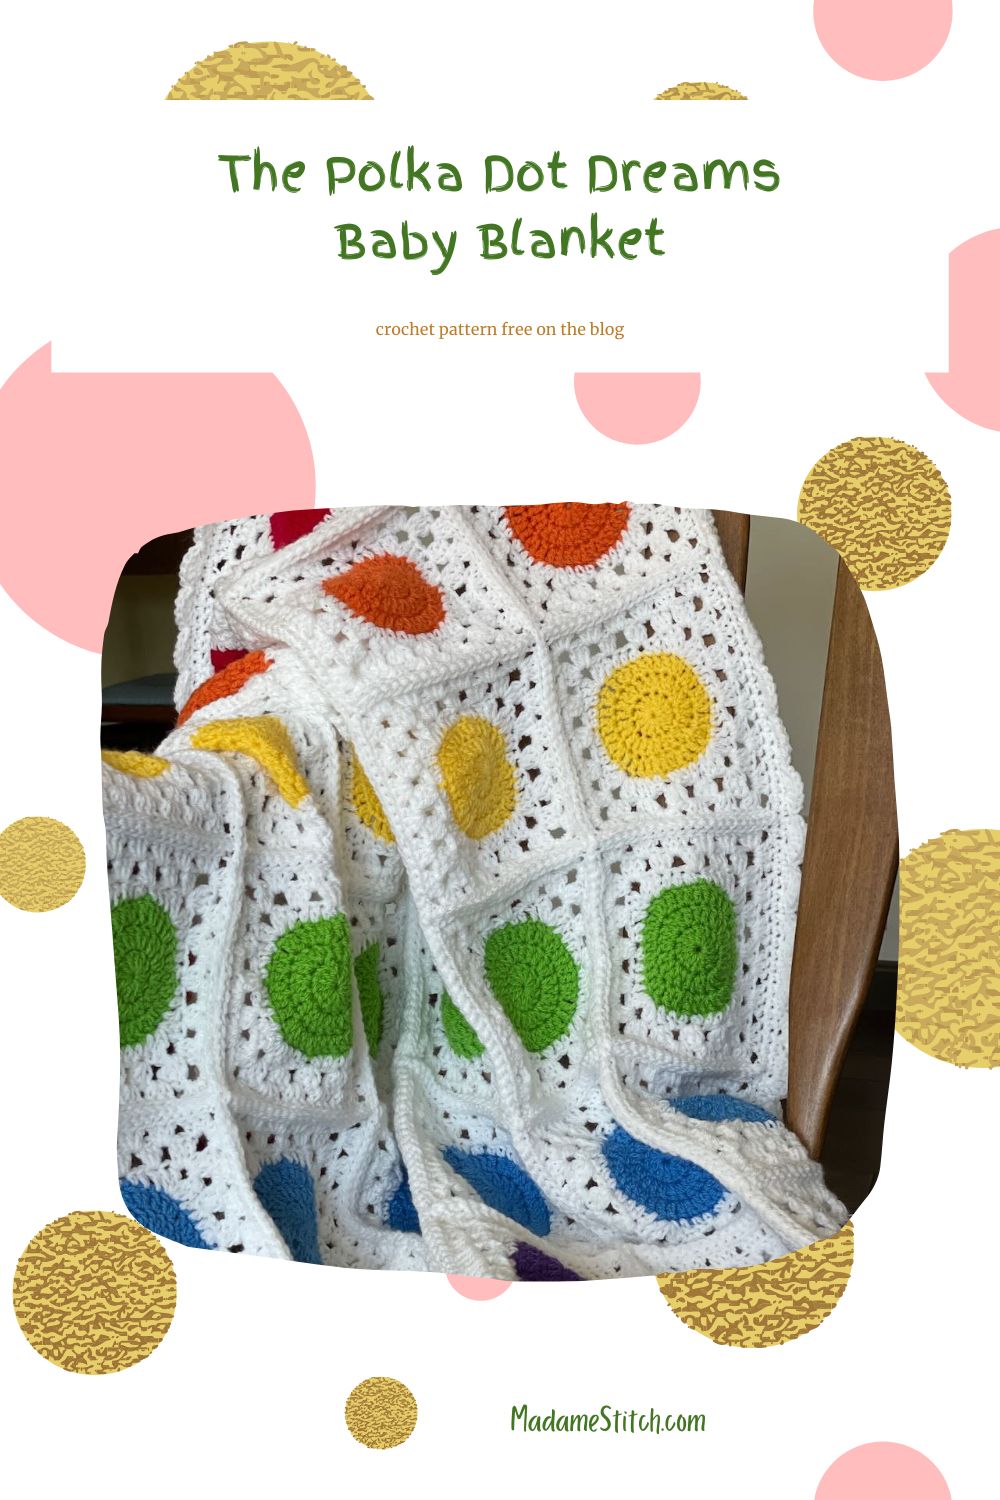 The Polka Dot Dreams granny square baby blanket | A design by MadameStitch